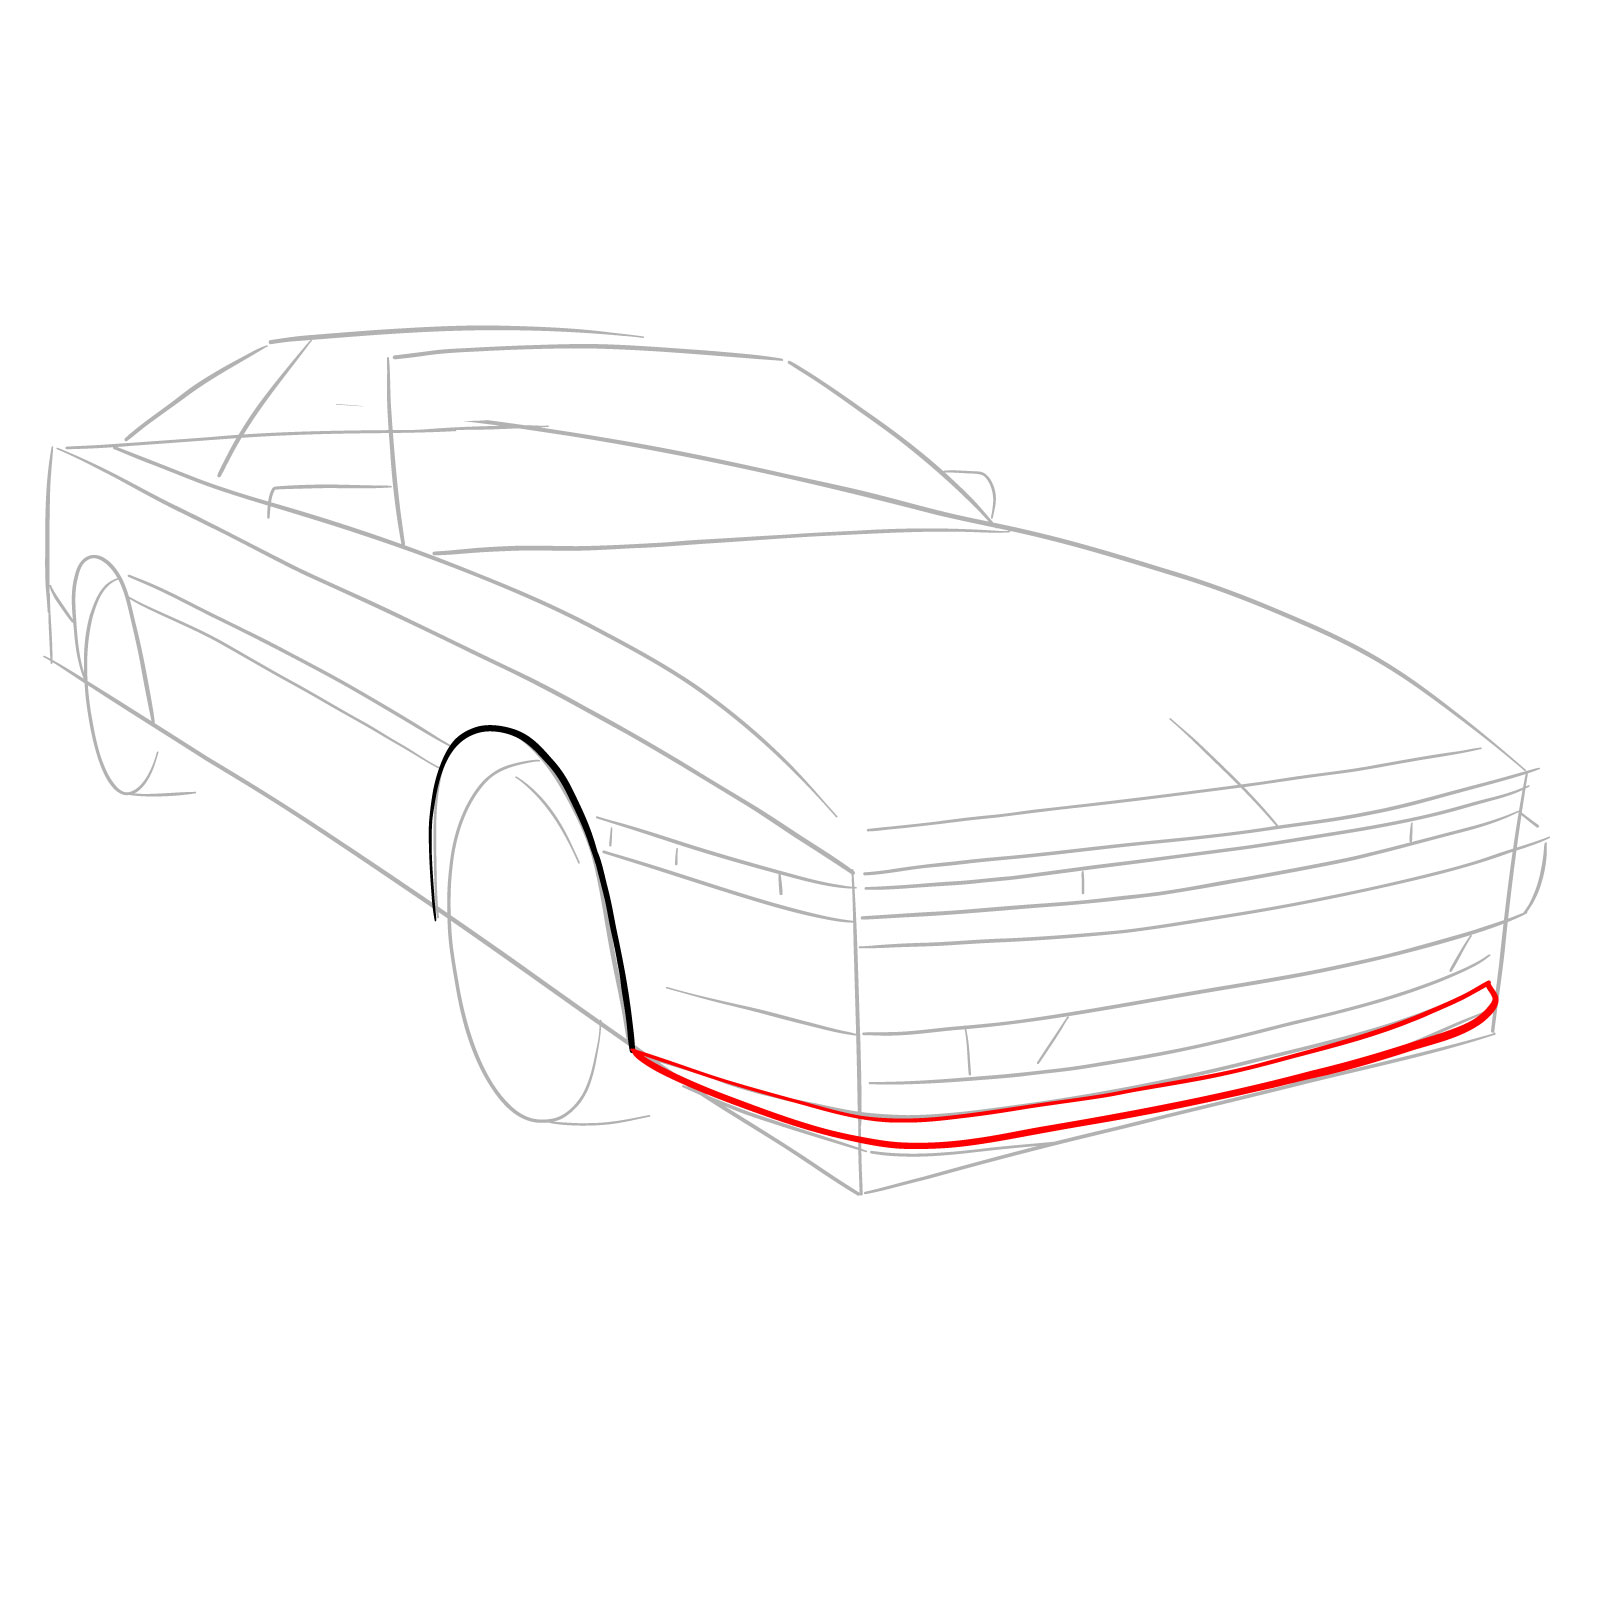 How to draw a 1988 Toyota Supra Turbo MK 3 - step 05